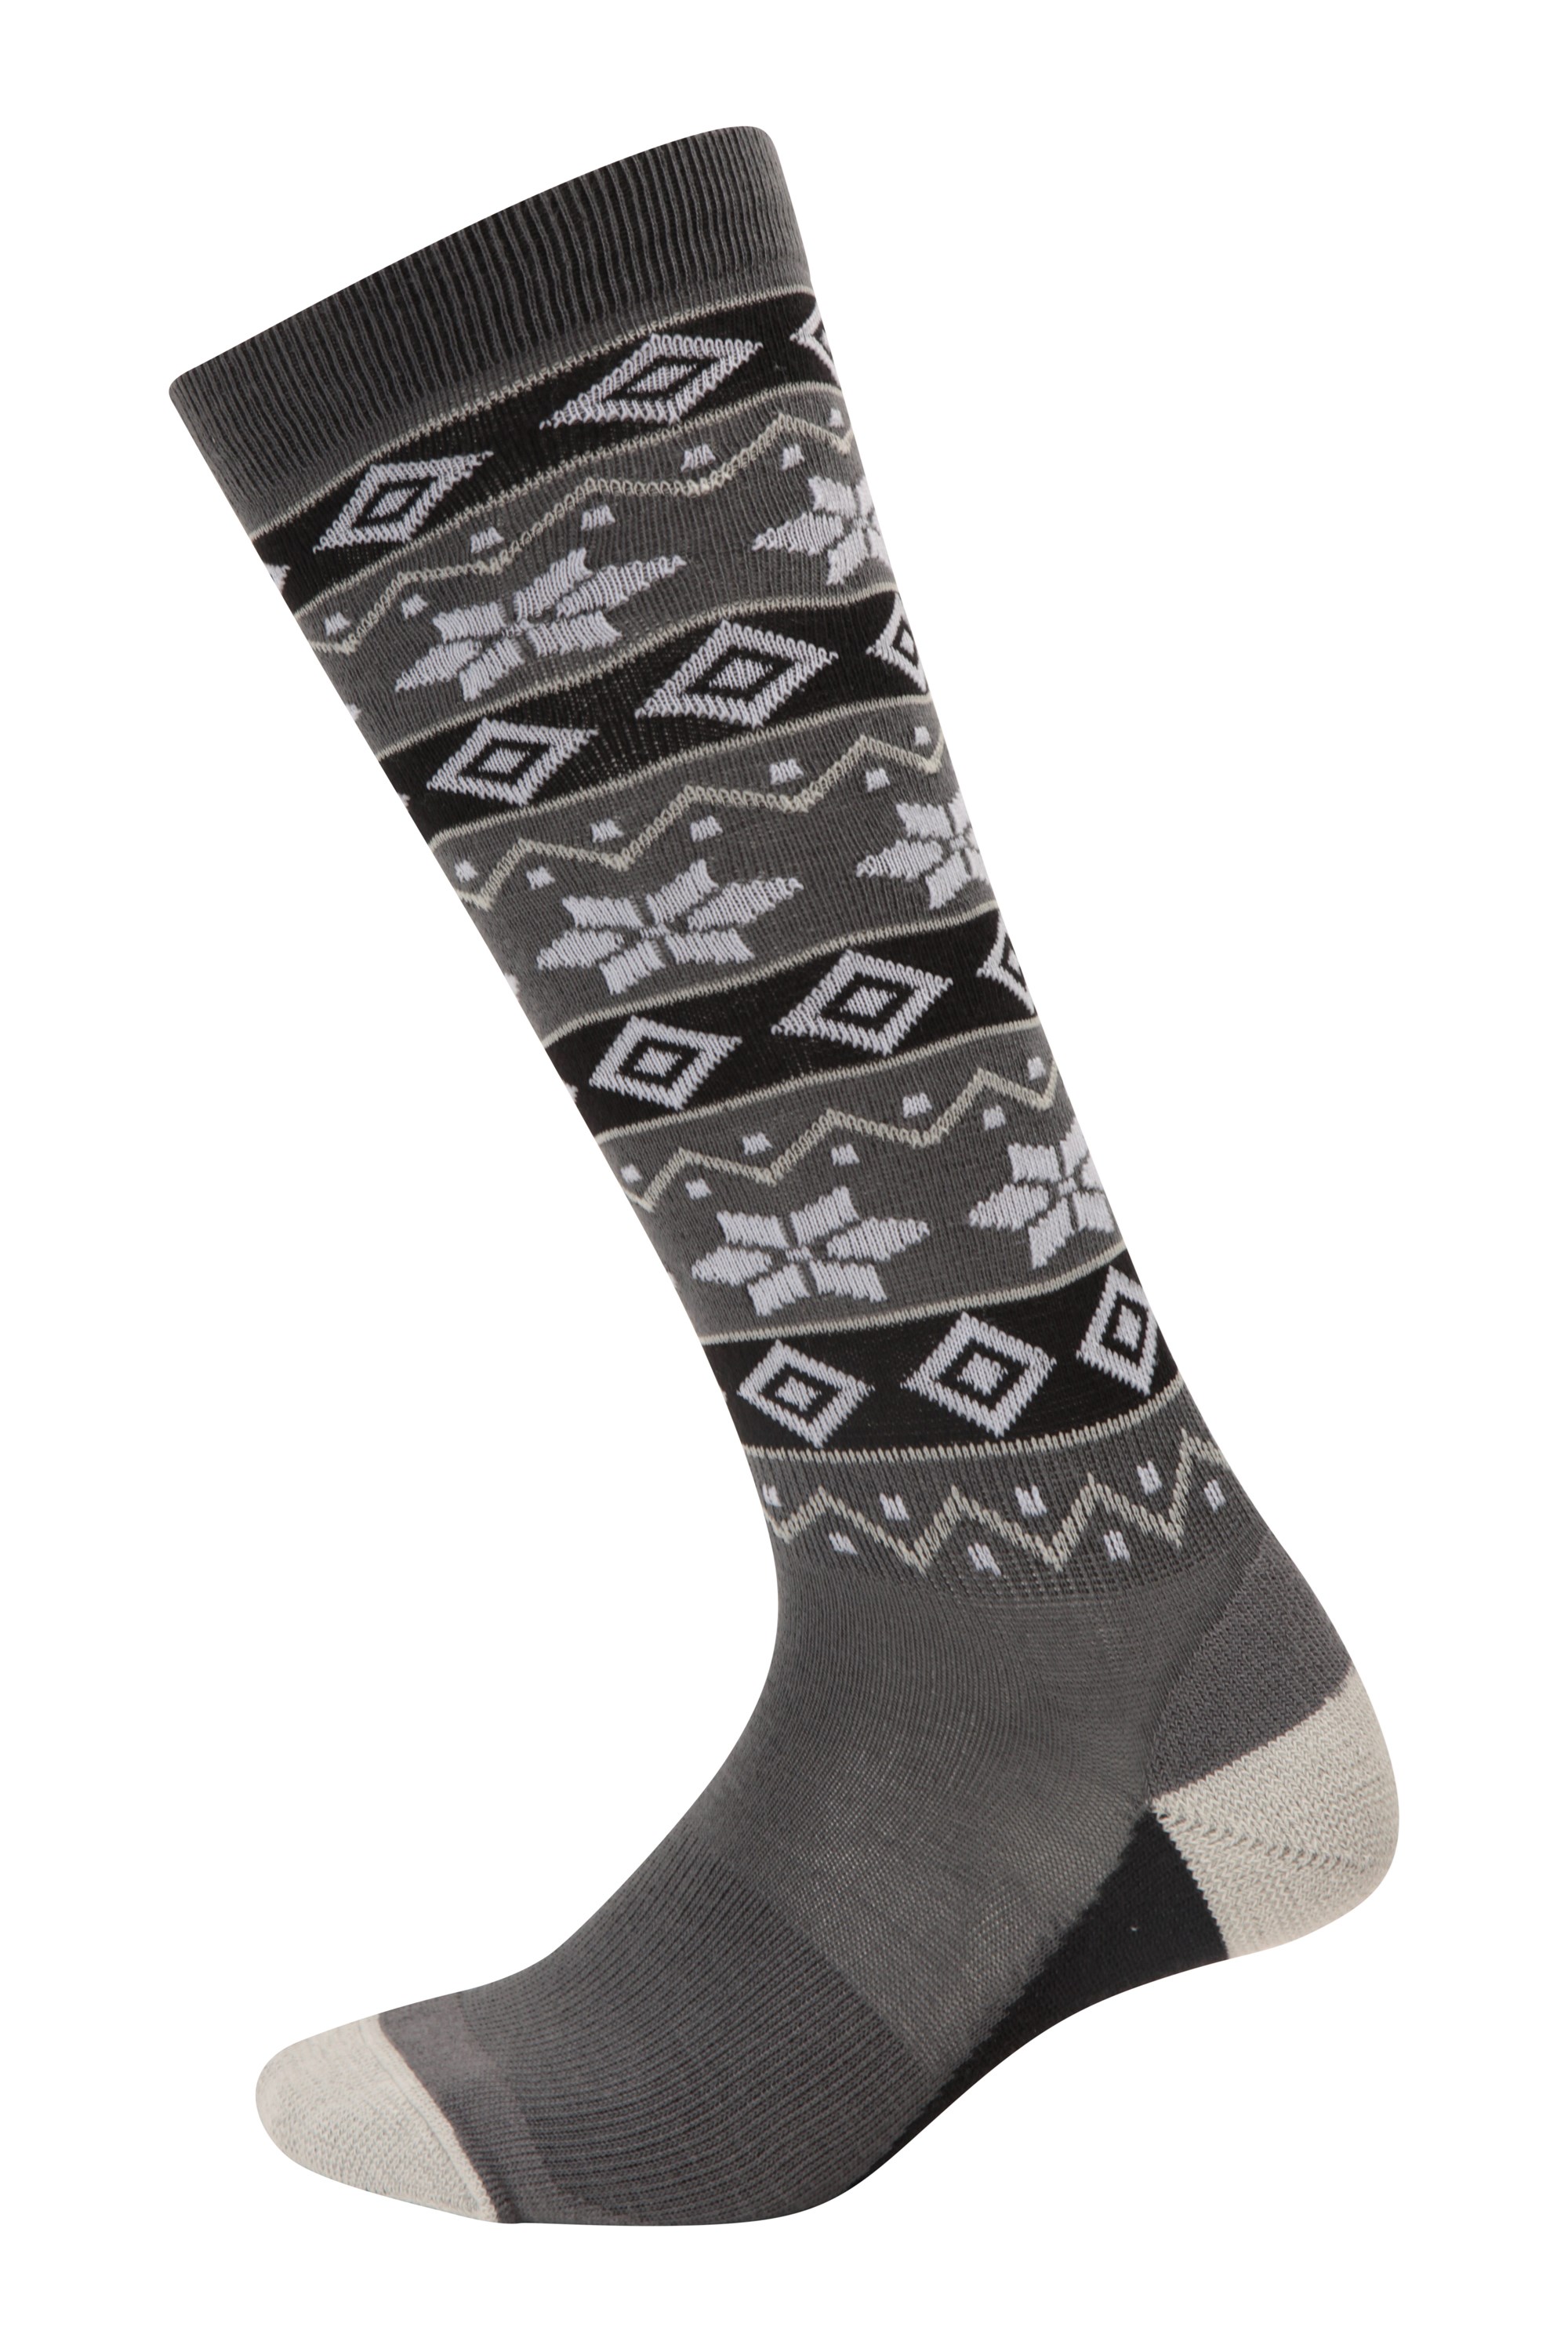 Mountain Warehouse Lightweight Wms  Cosy Womens Patterned Sock In Grey 4-7 